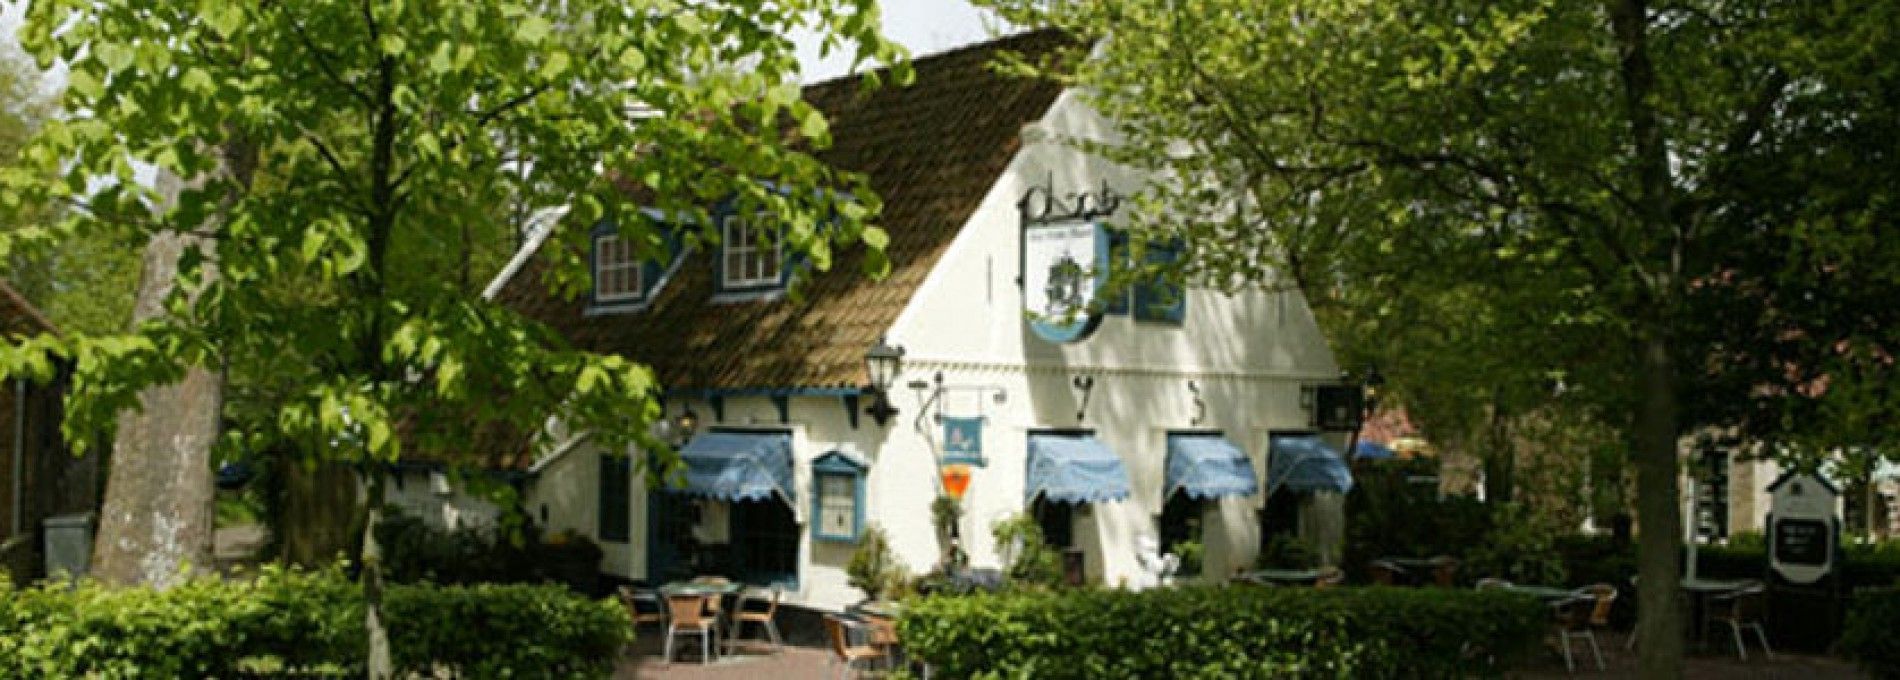 Restaurants in Nes - Tourist Information “VVV” Ameland